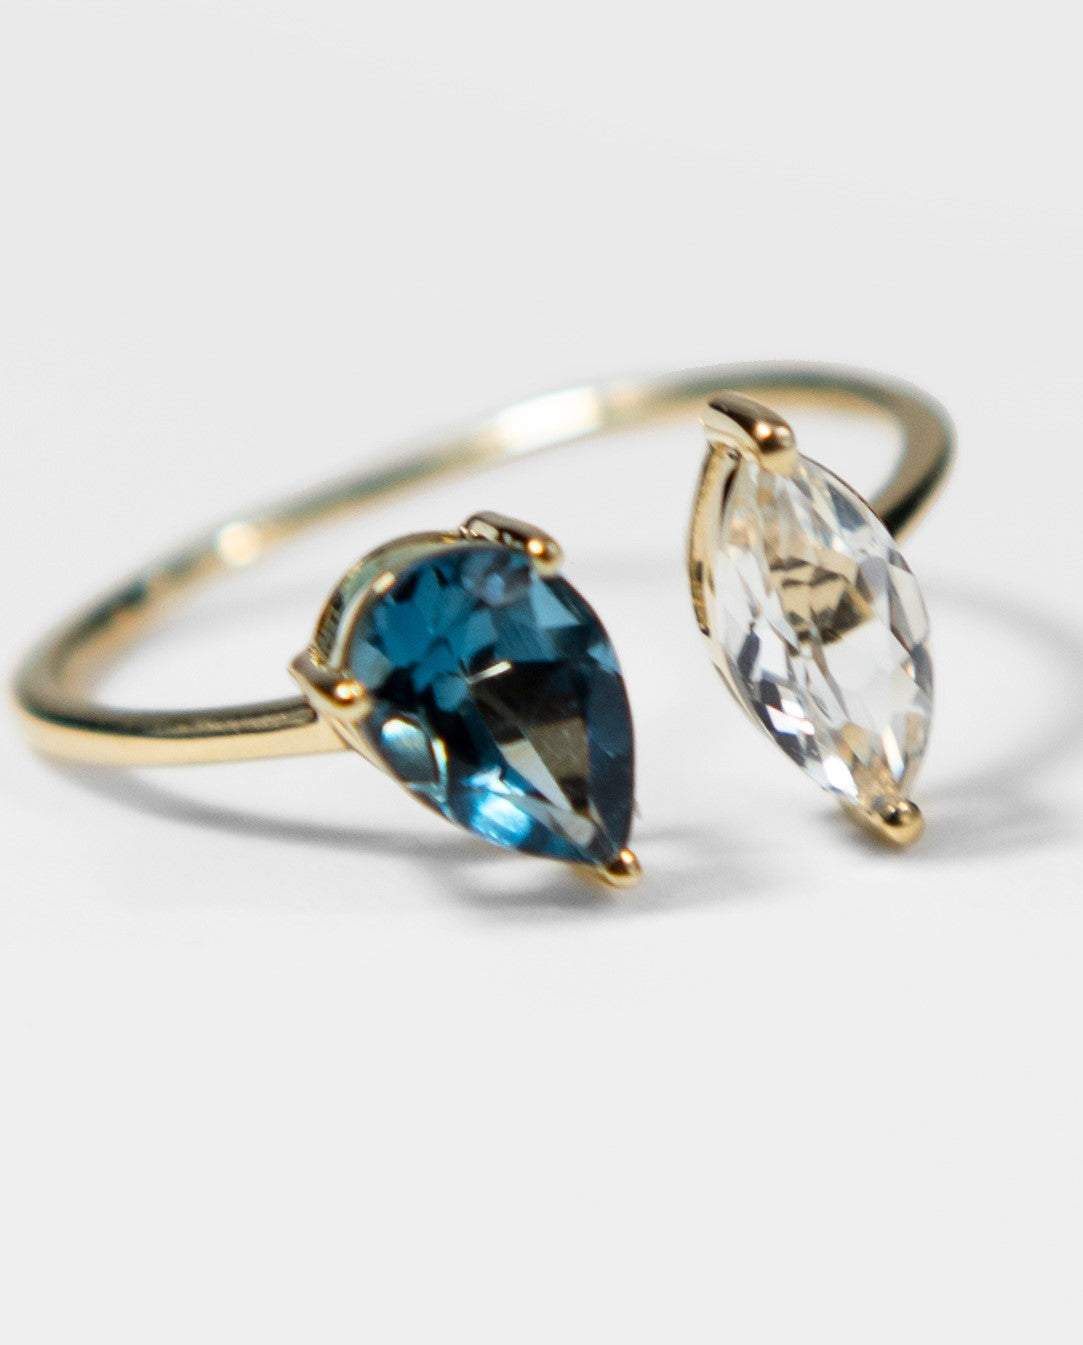 Blue and White Topaz Ring: